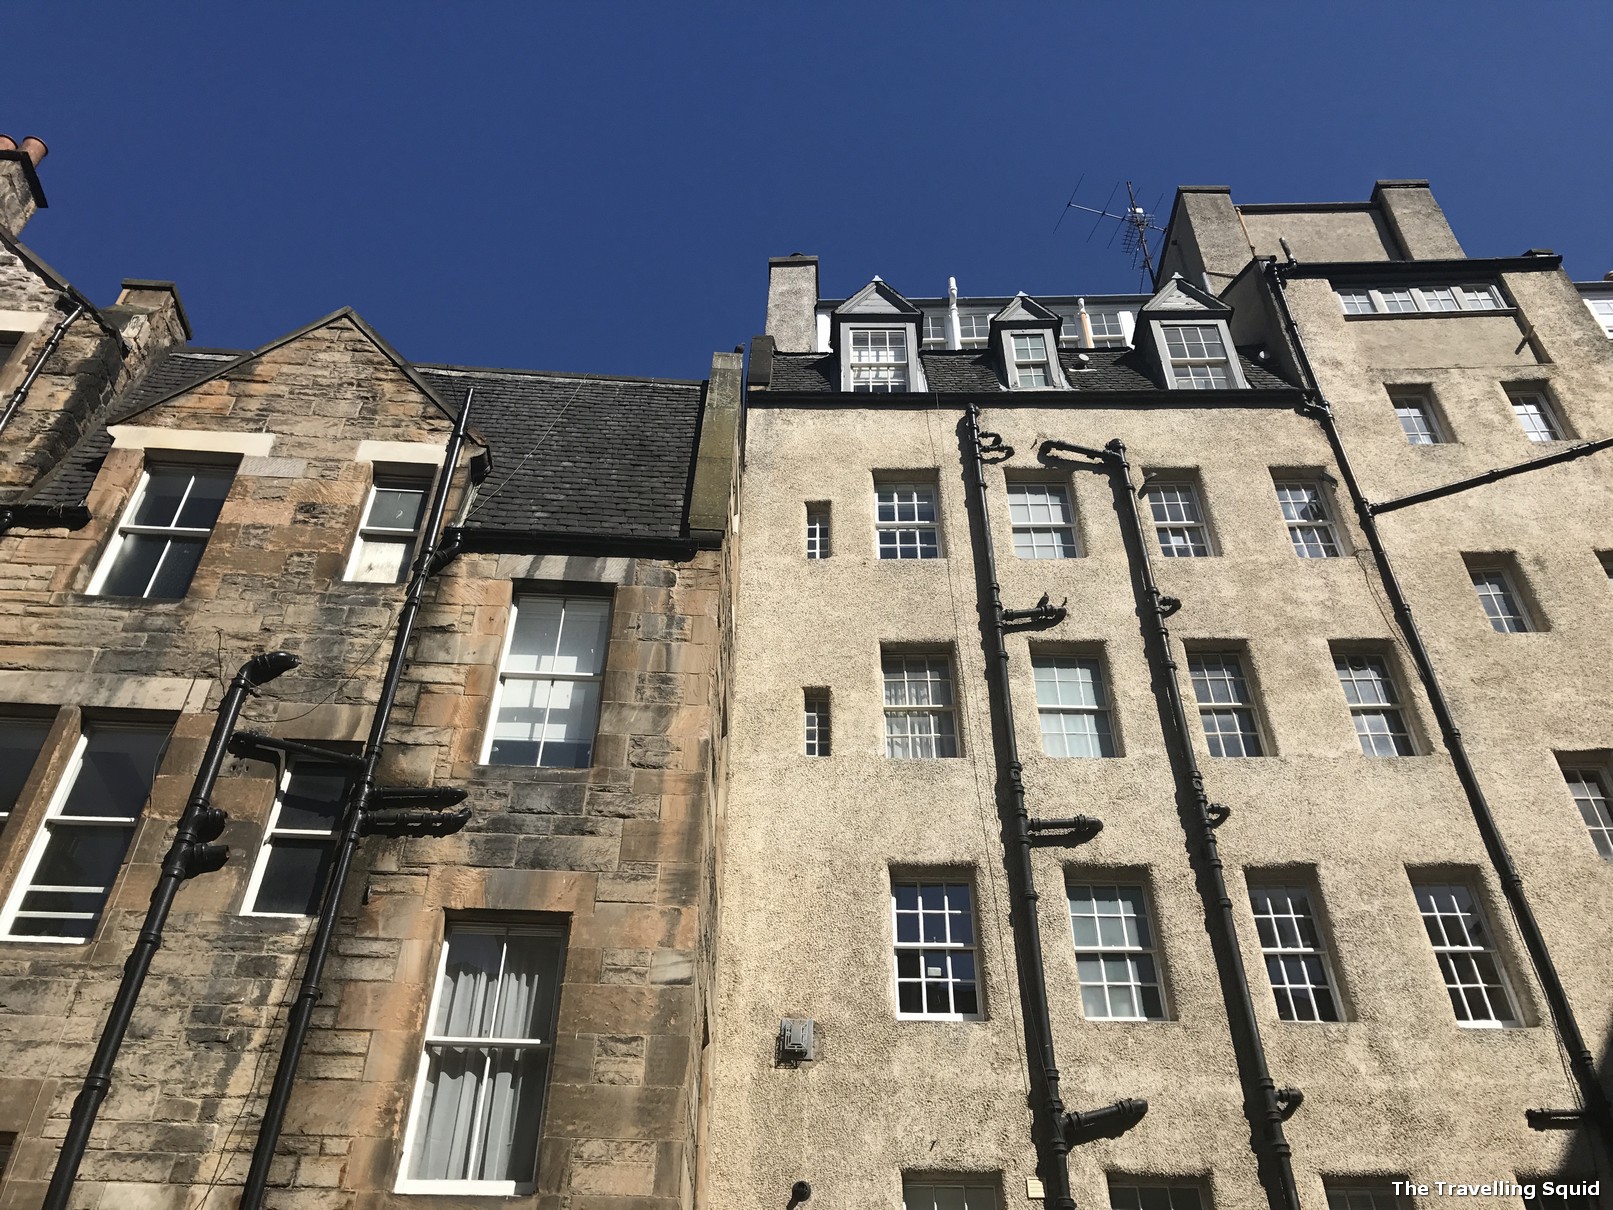 Should you go on a Sandemans free tour of Edinburgh